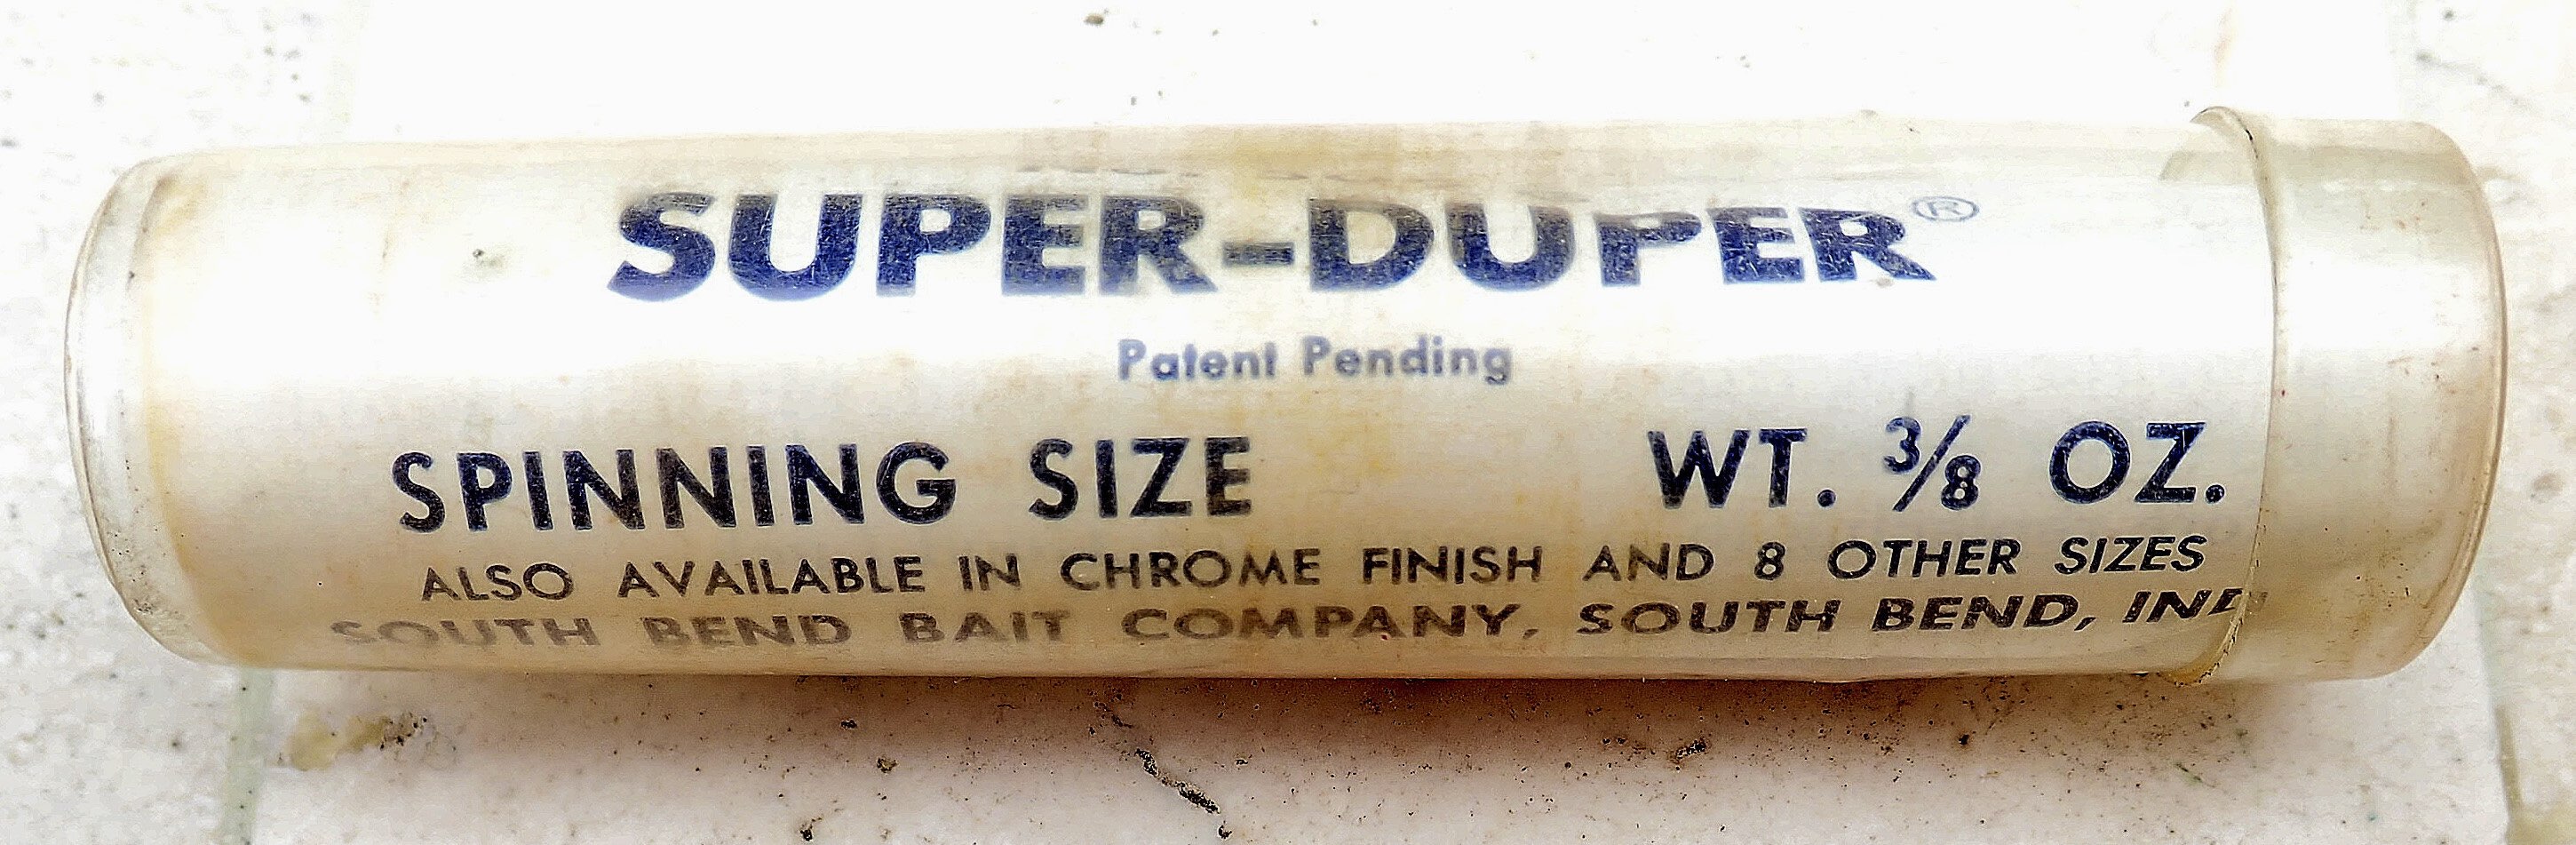 VINTAGE FISHING LURE - South Bend - Super Duper Gold - #502 - Pat